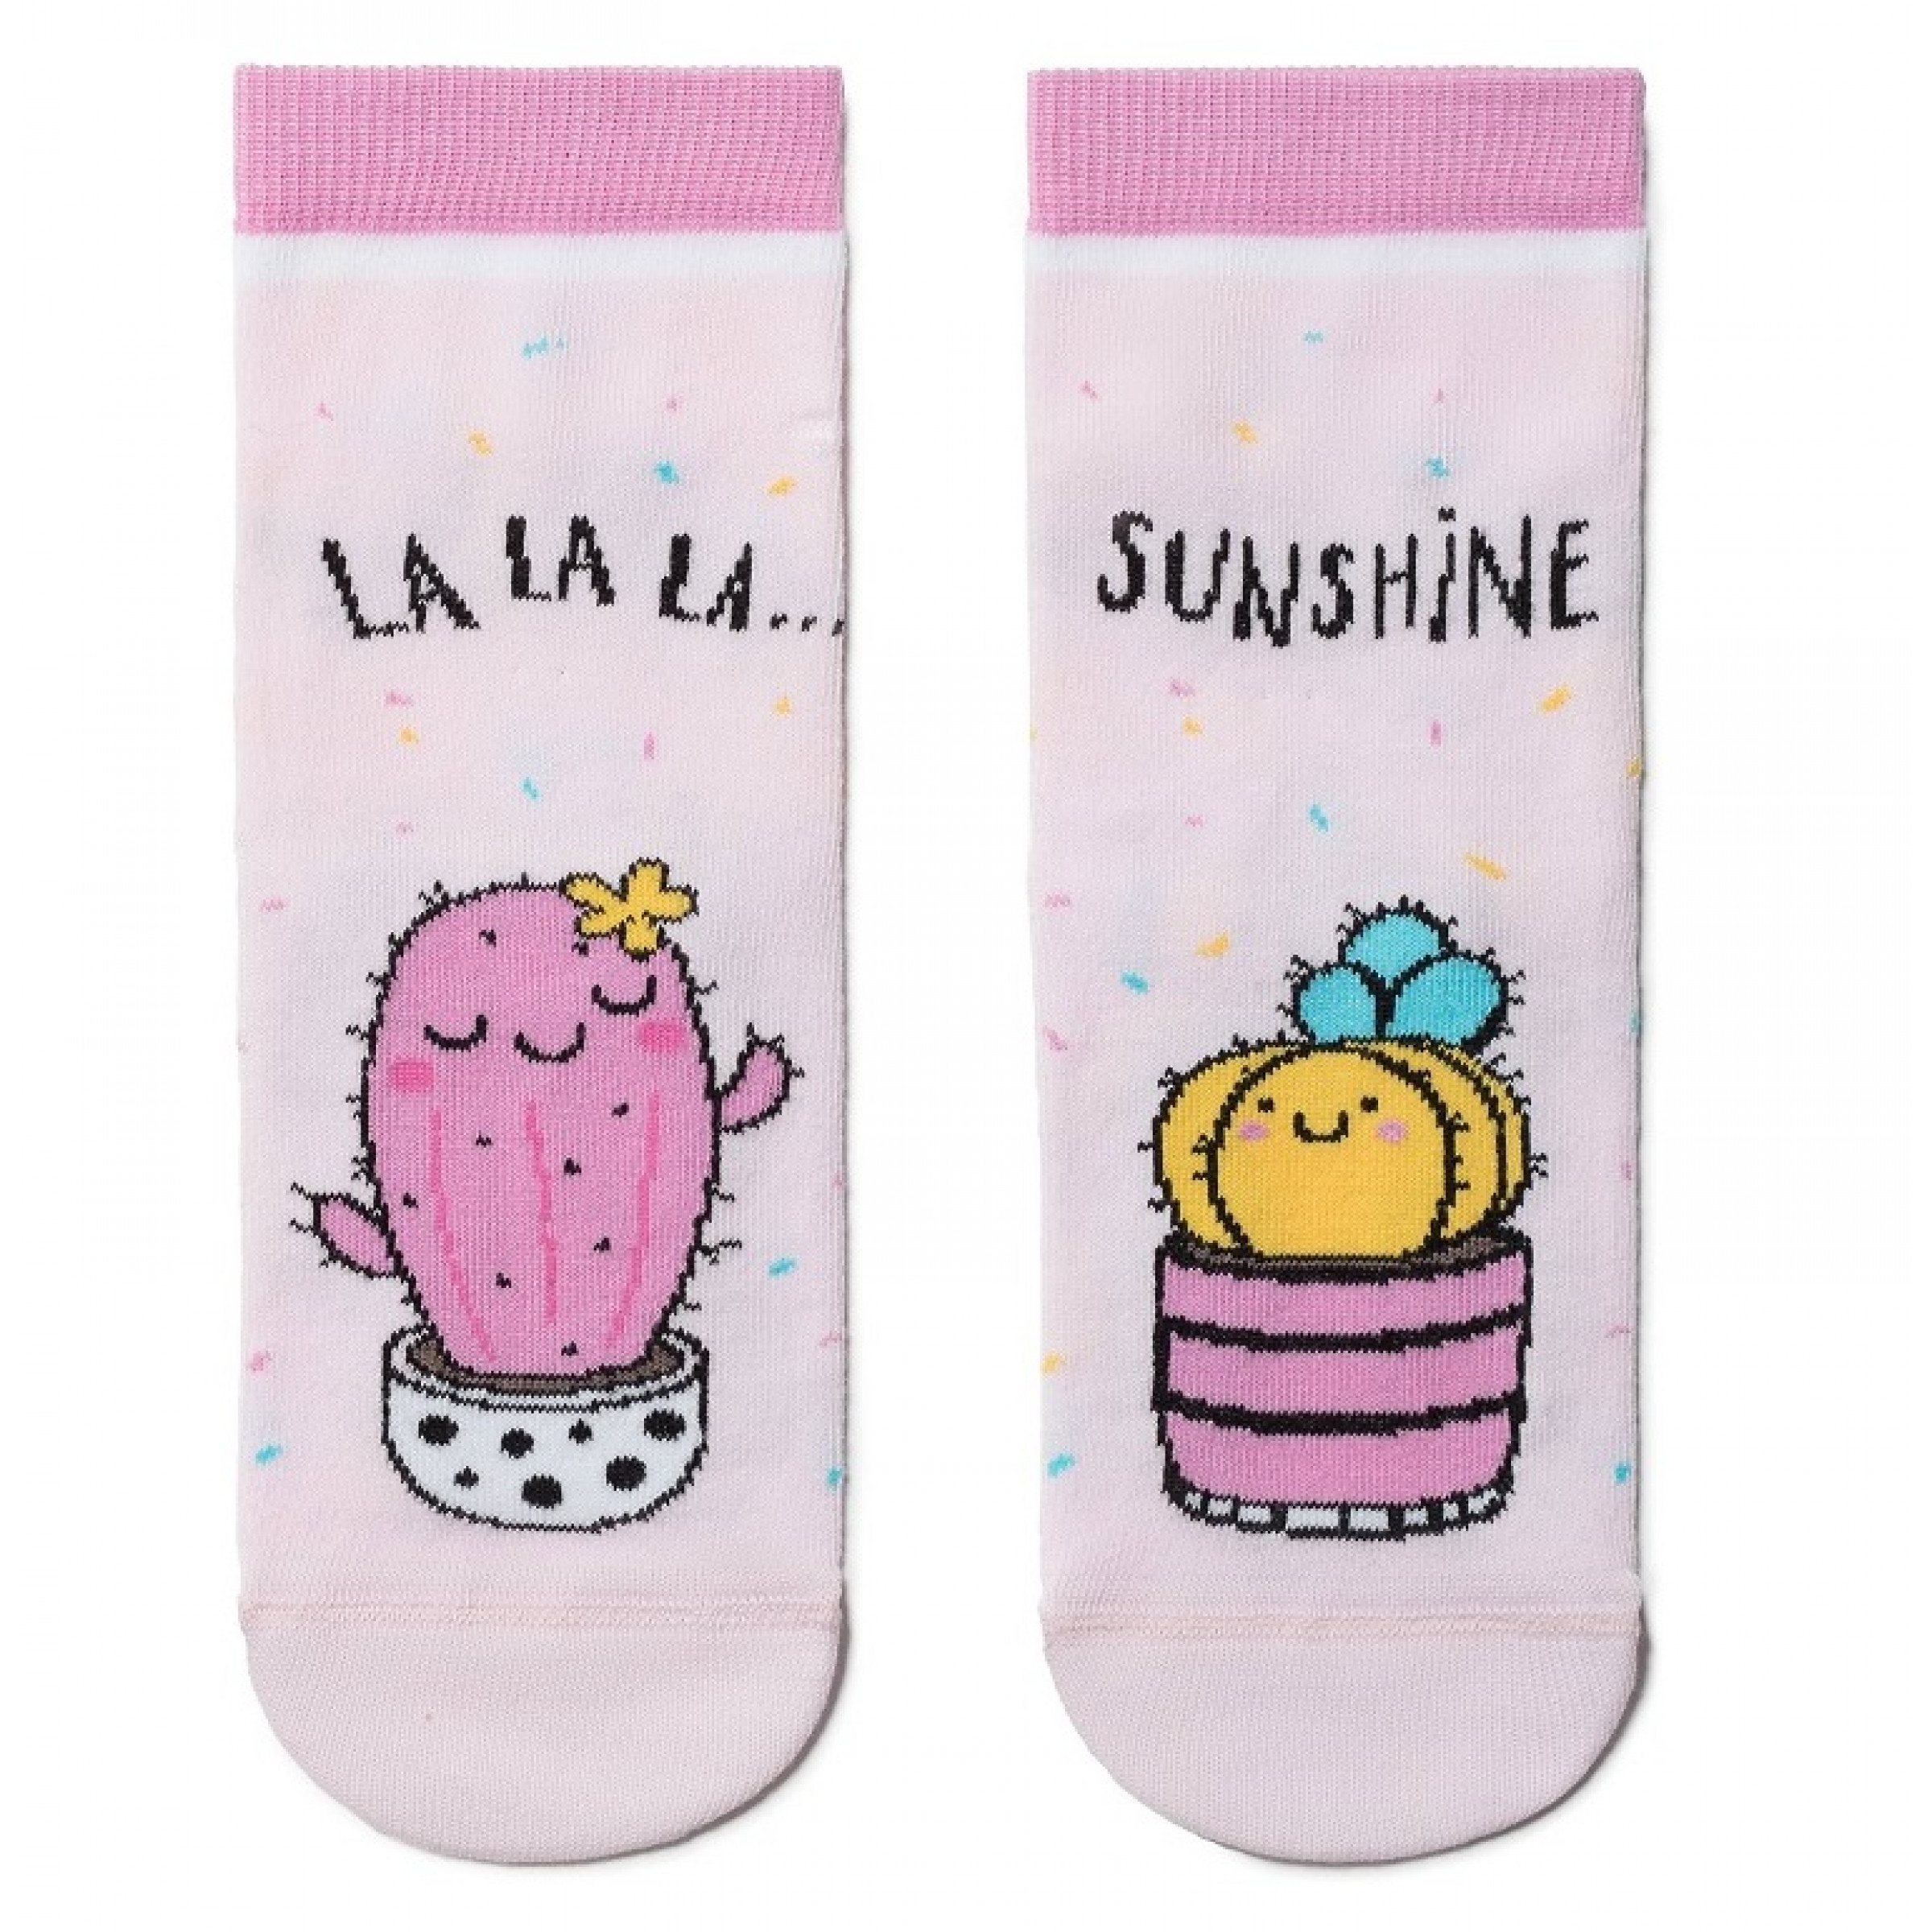 Детские носки Conte Веселые ножки 30-32 размер светло-розовый цвет